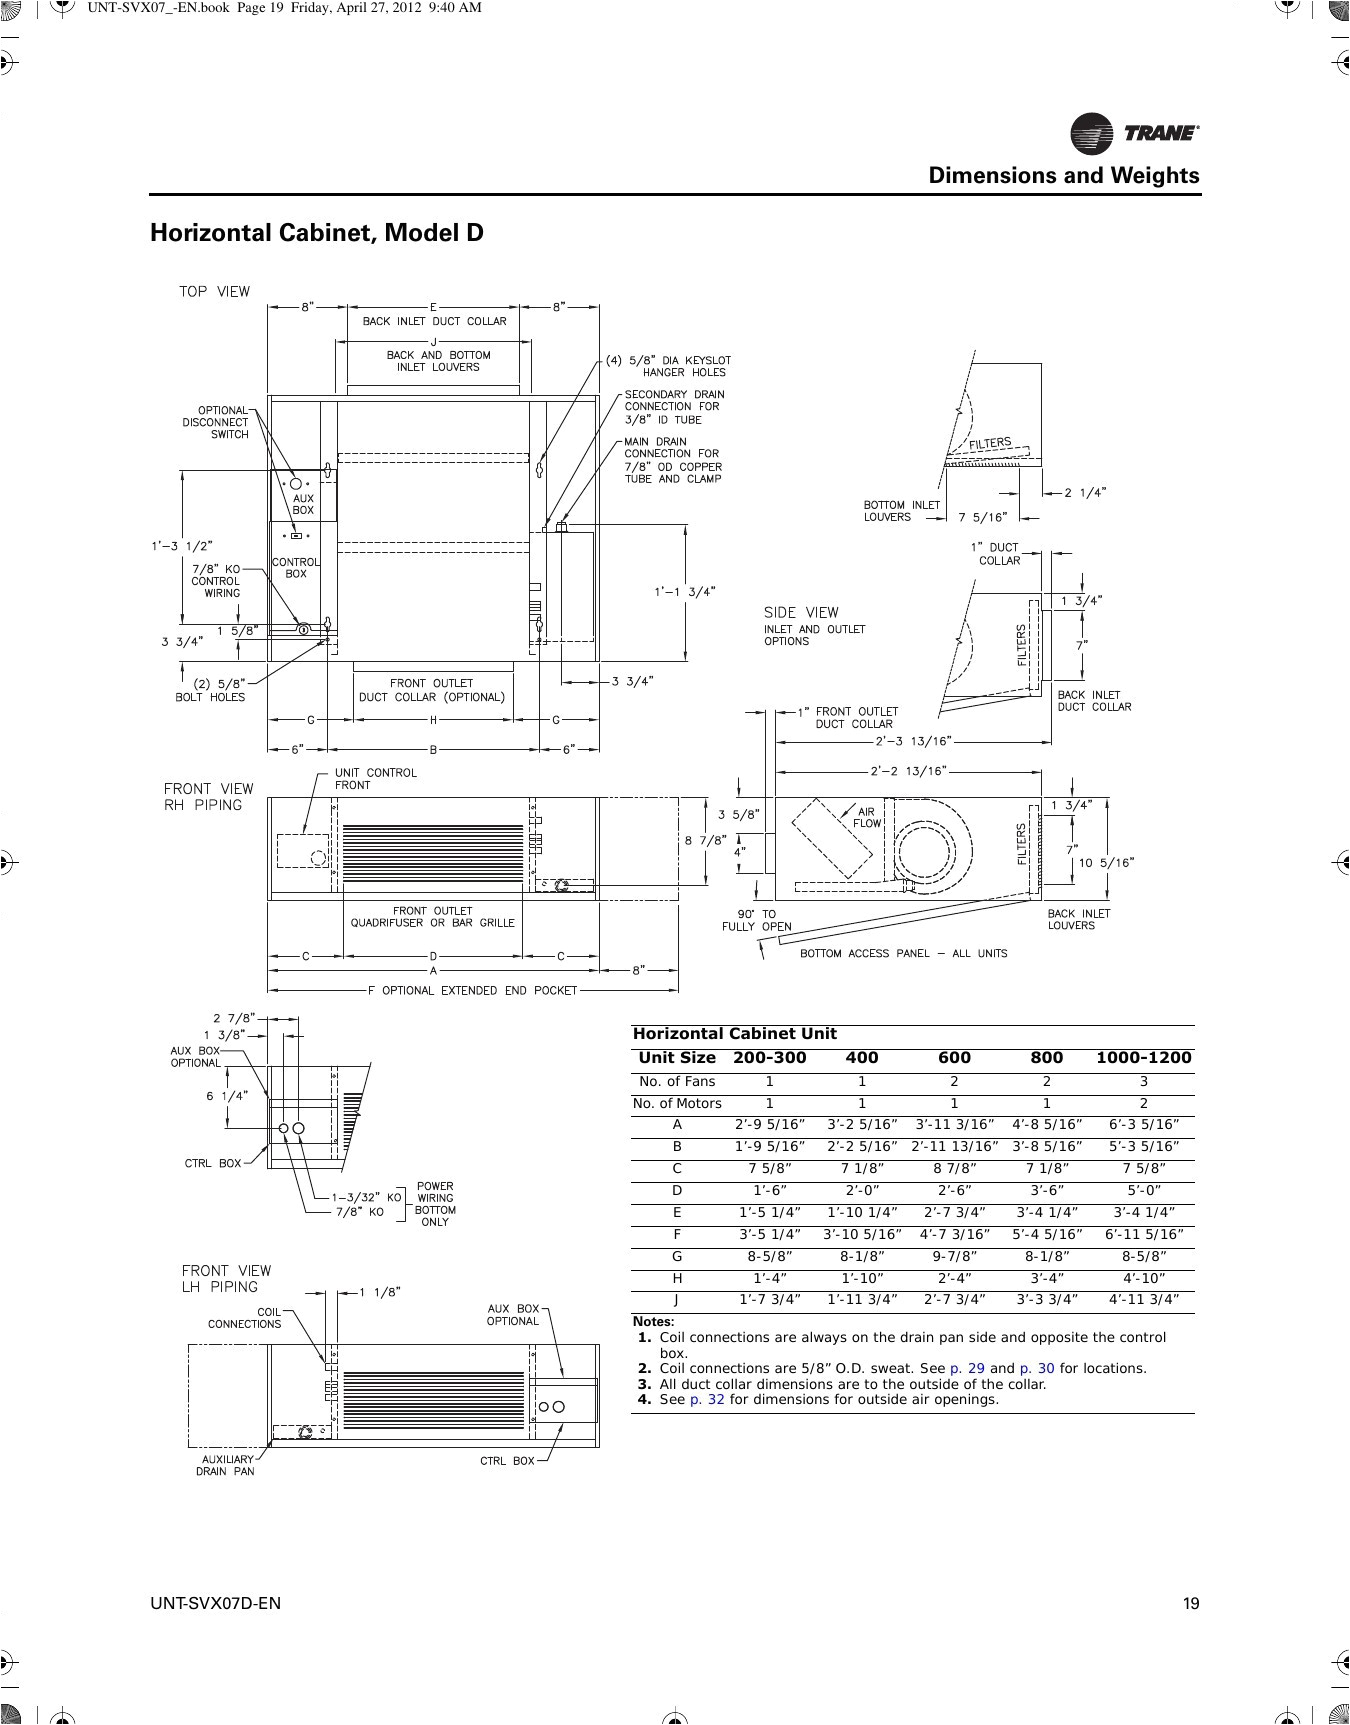 honeywell manual thermostat wiring diagram beautiful luxaireluxaire thermostat wiring diagram 20